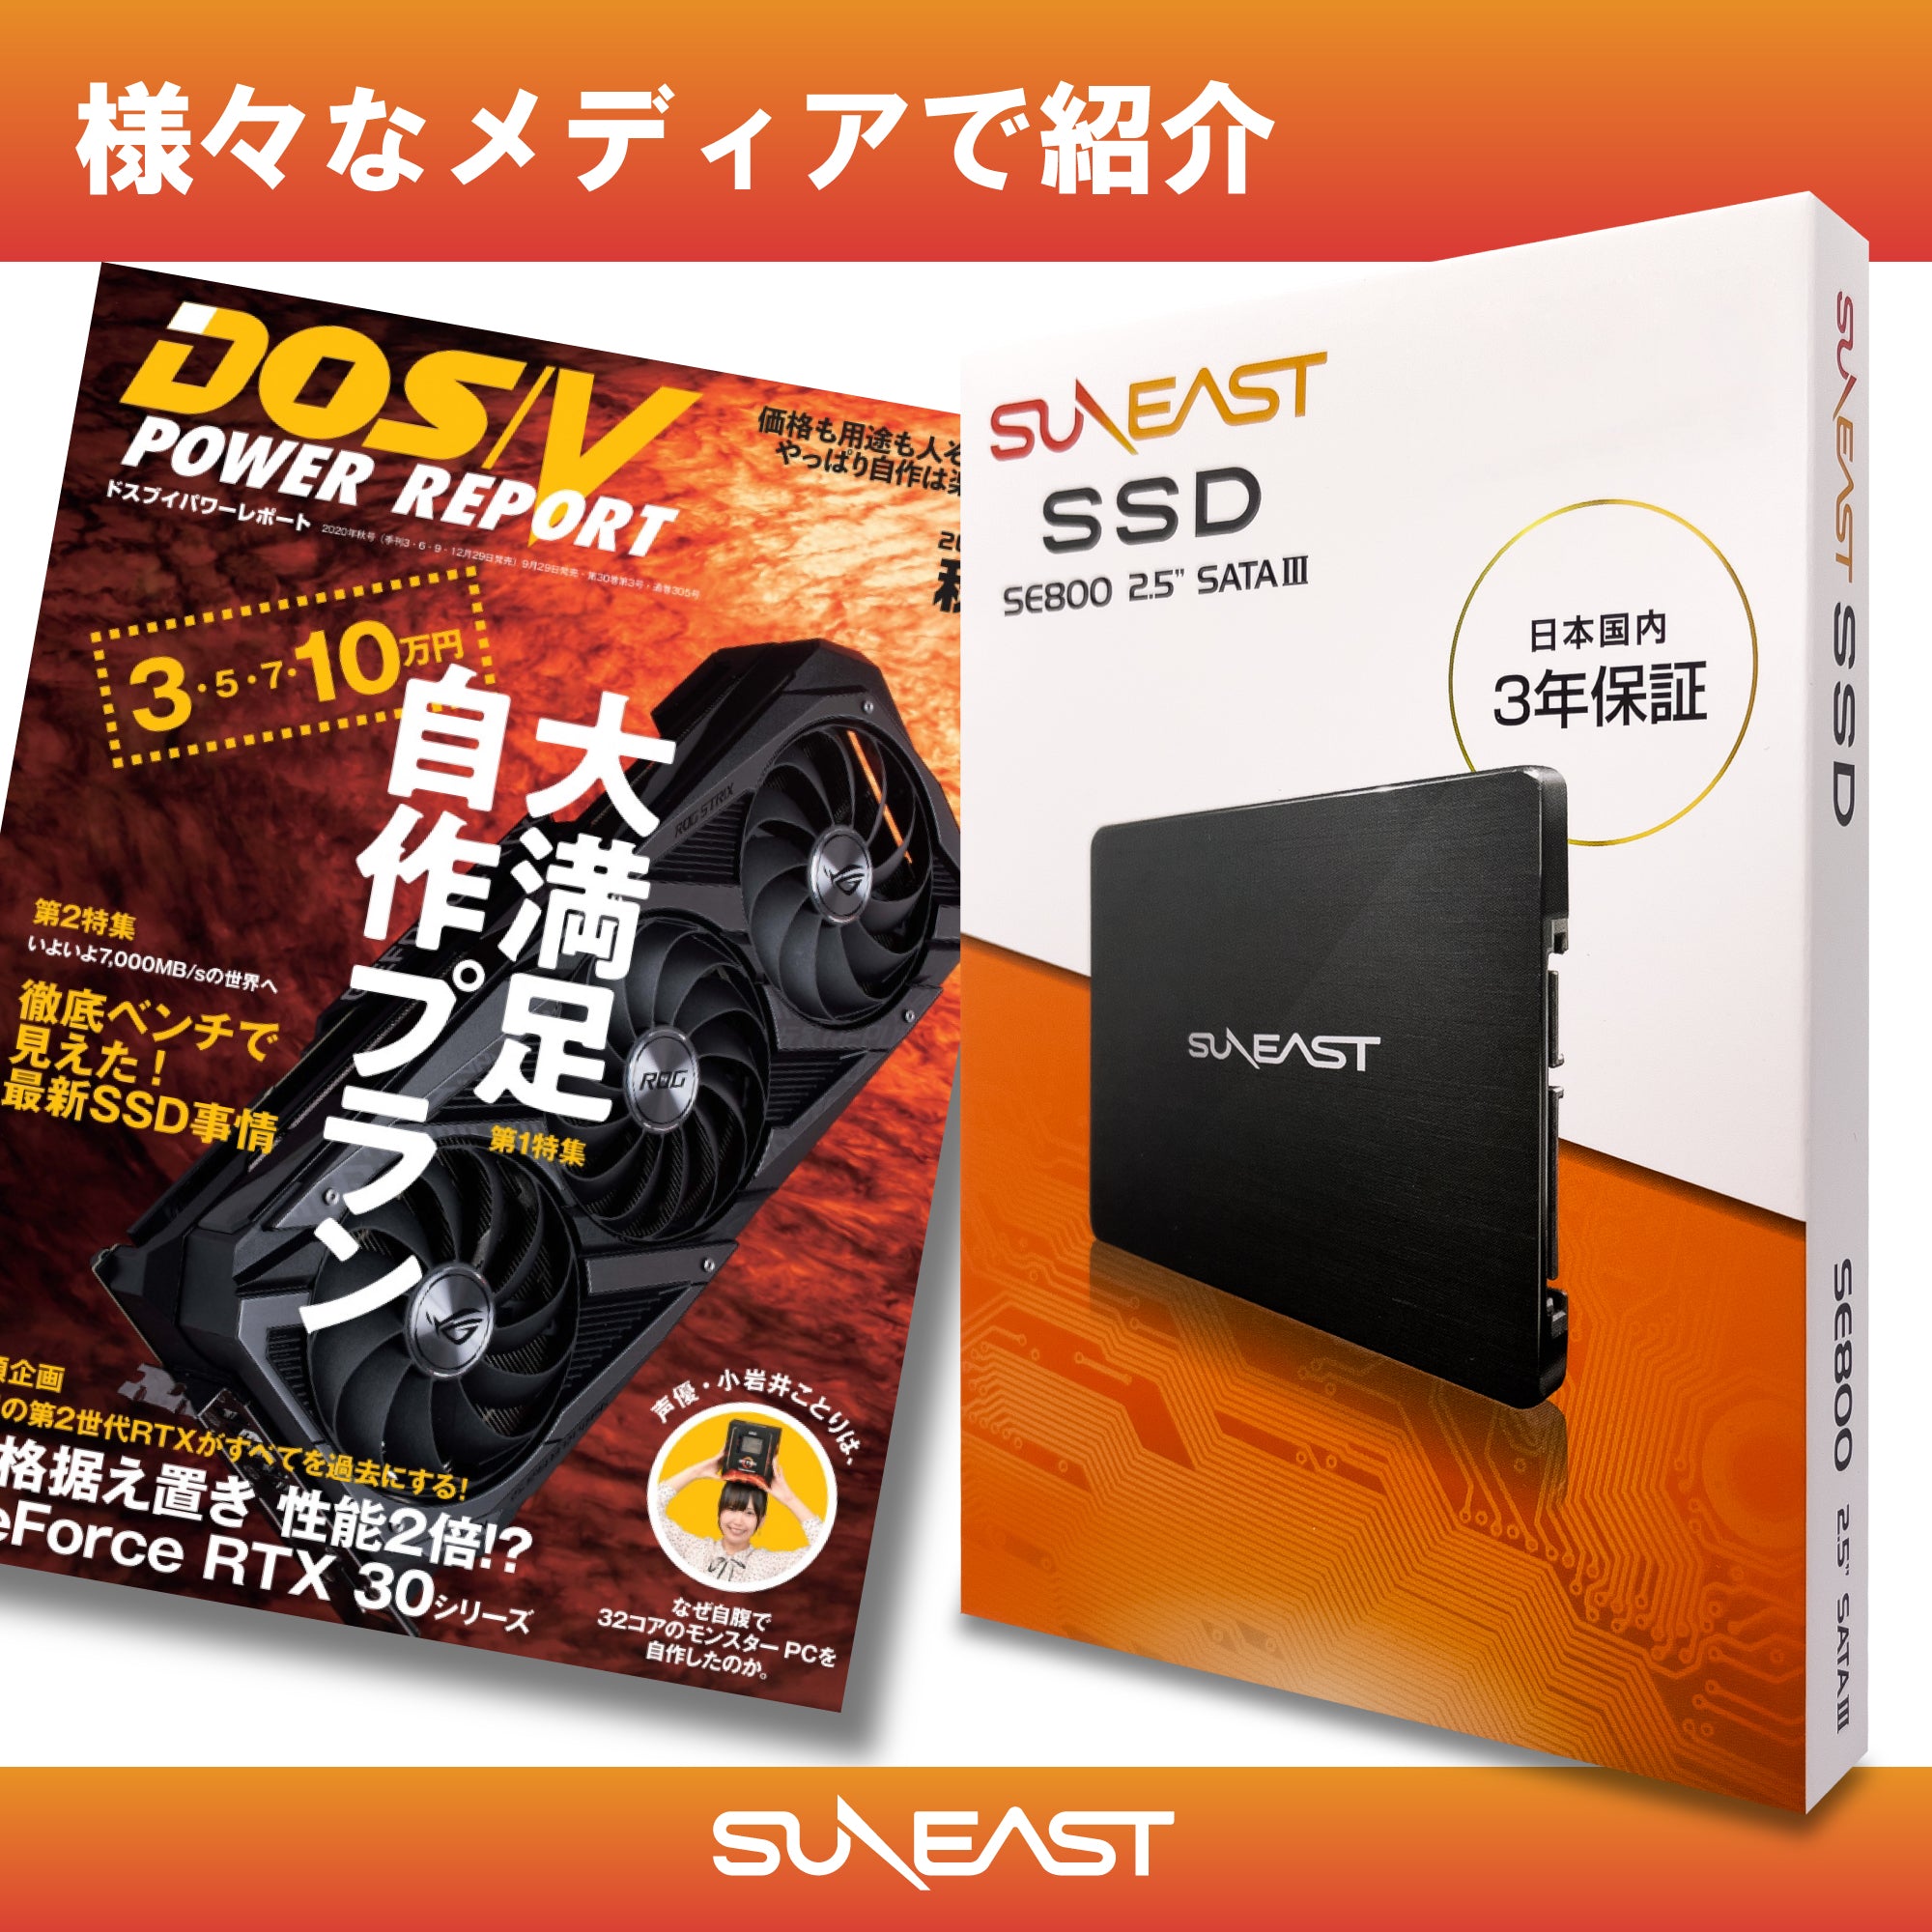 2.5inch SATAIII SSD【SE800】320GB - SUNEAST online store